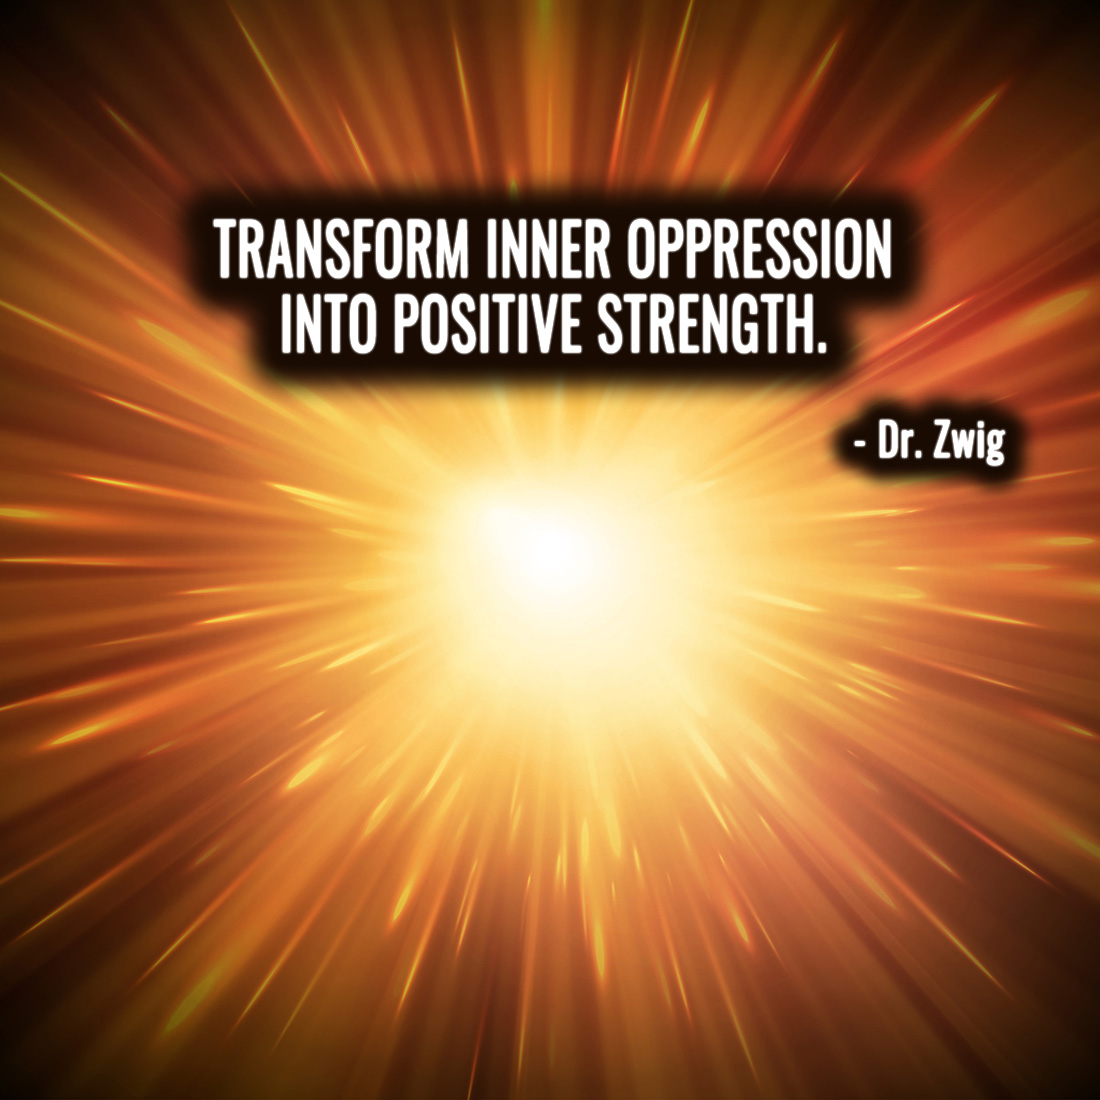 Transform inner oppression into positive strength.